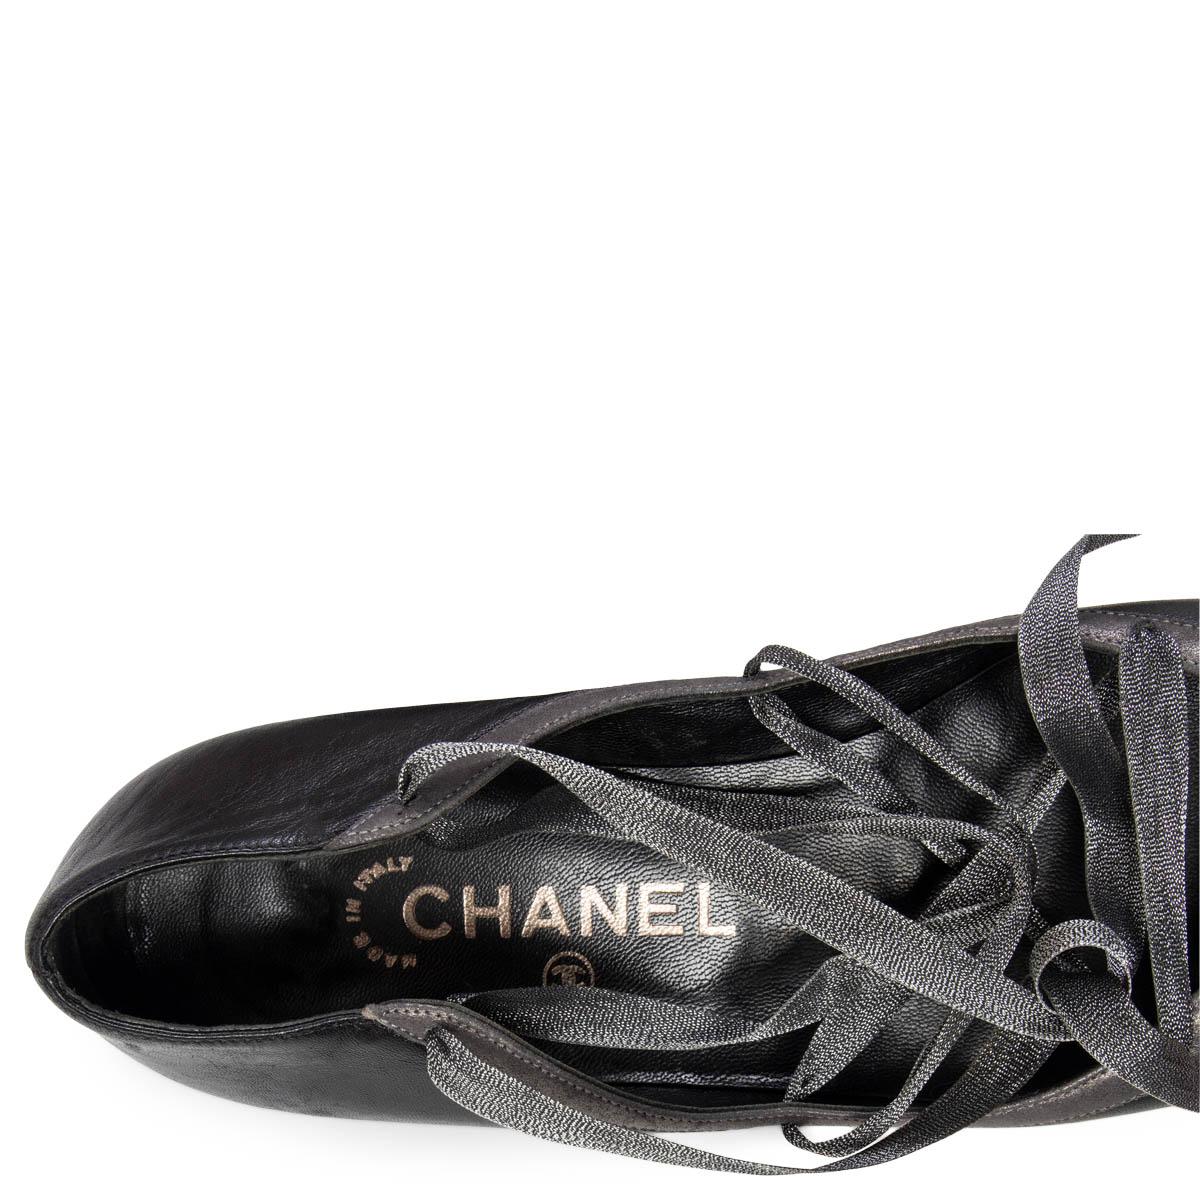 CHANEL black & grey leather LACE UP BALLET Pumps Shoes 37 1